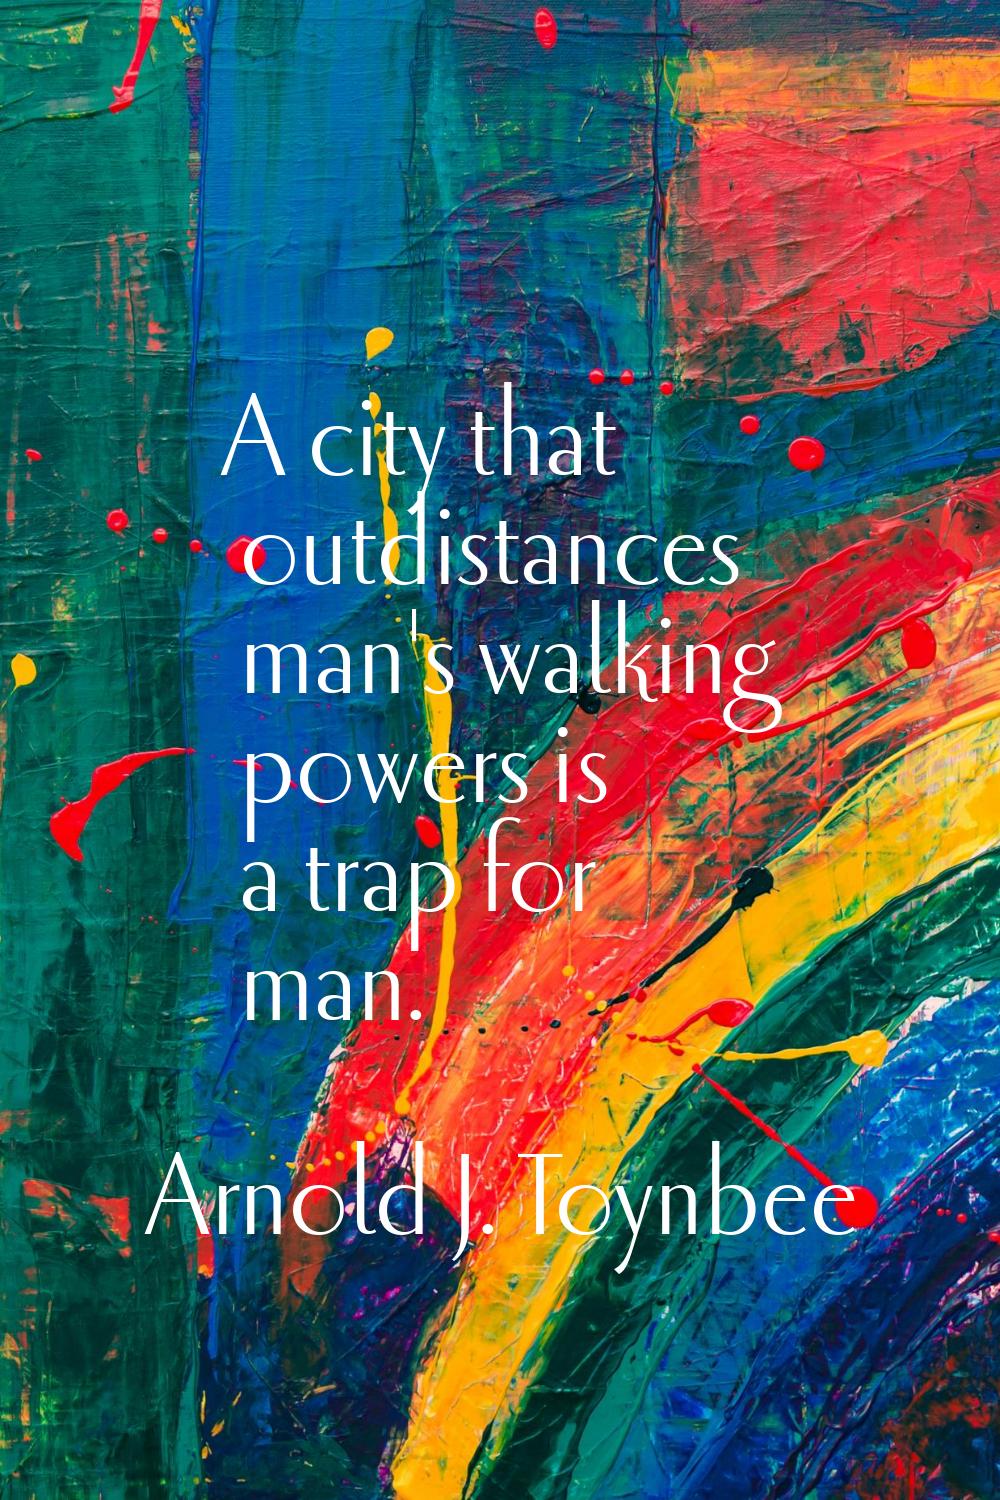 A city that outdistances man's walking powers is a trap for man.